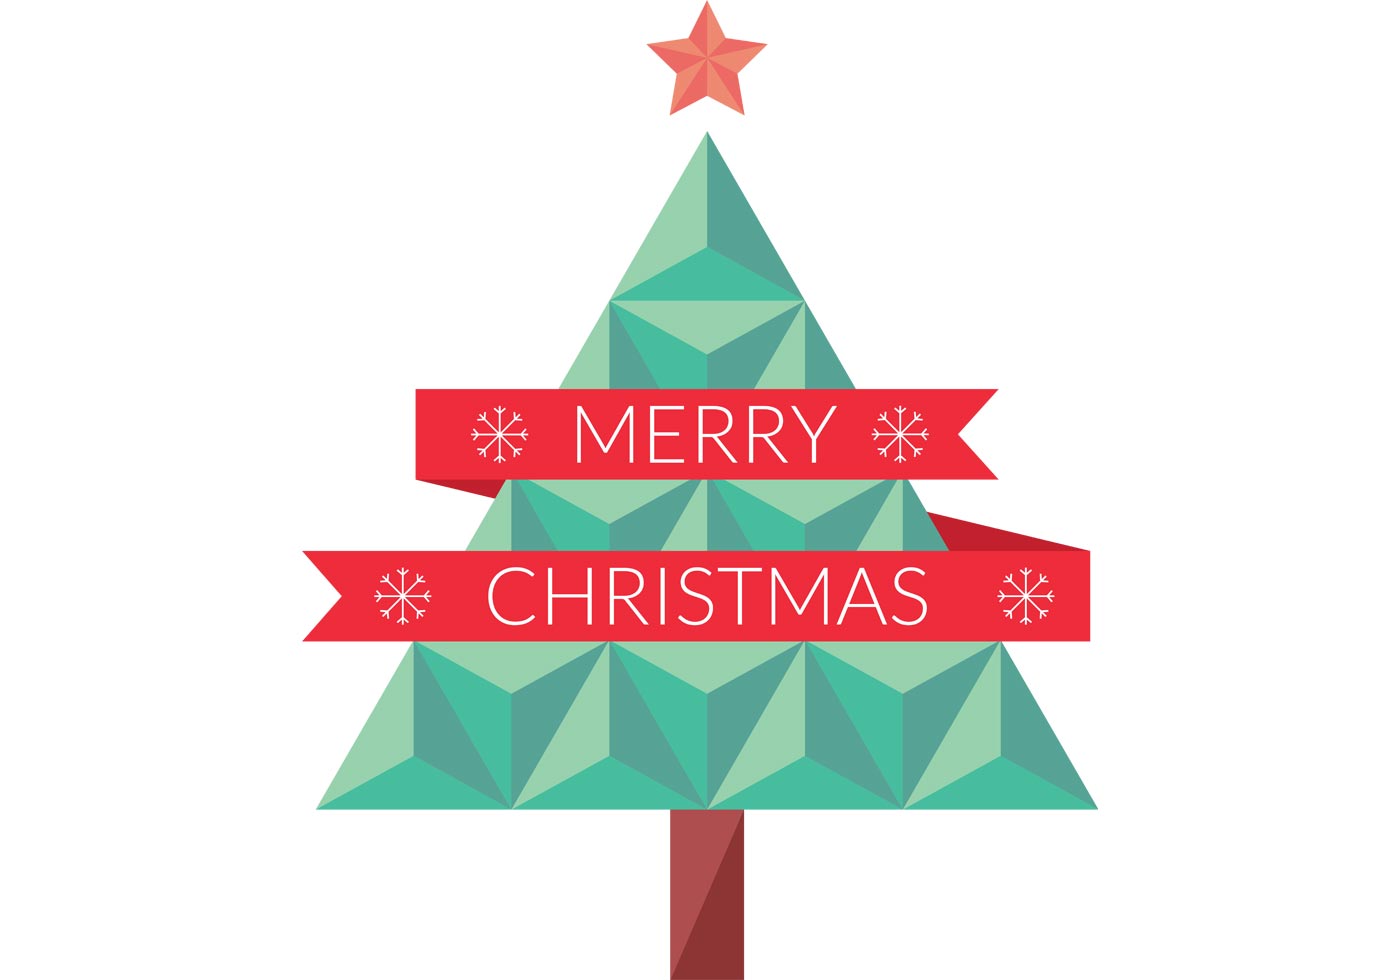 Flat Geometric Christmas Tree Vector | Free Vector Art at ...